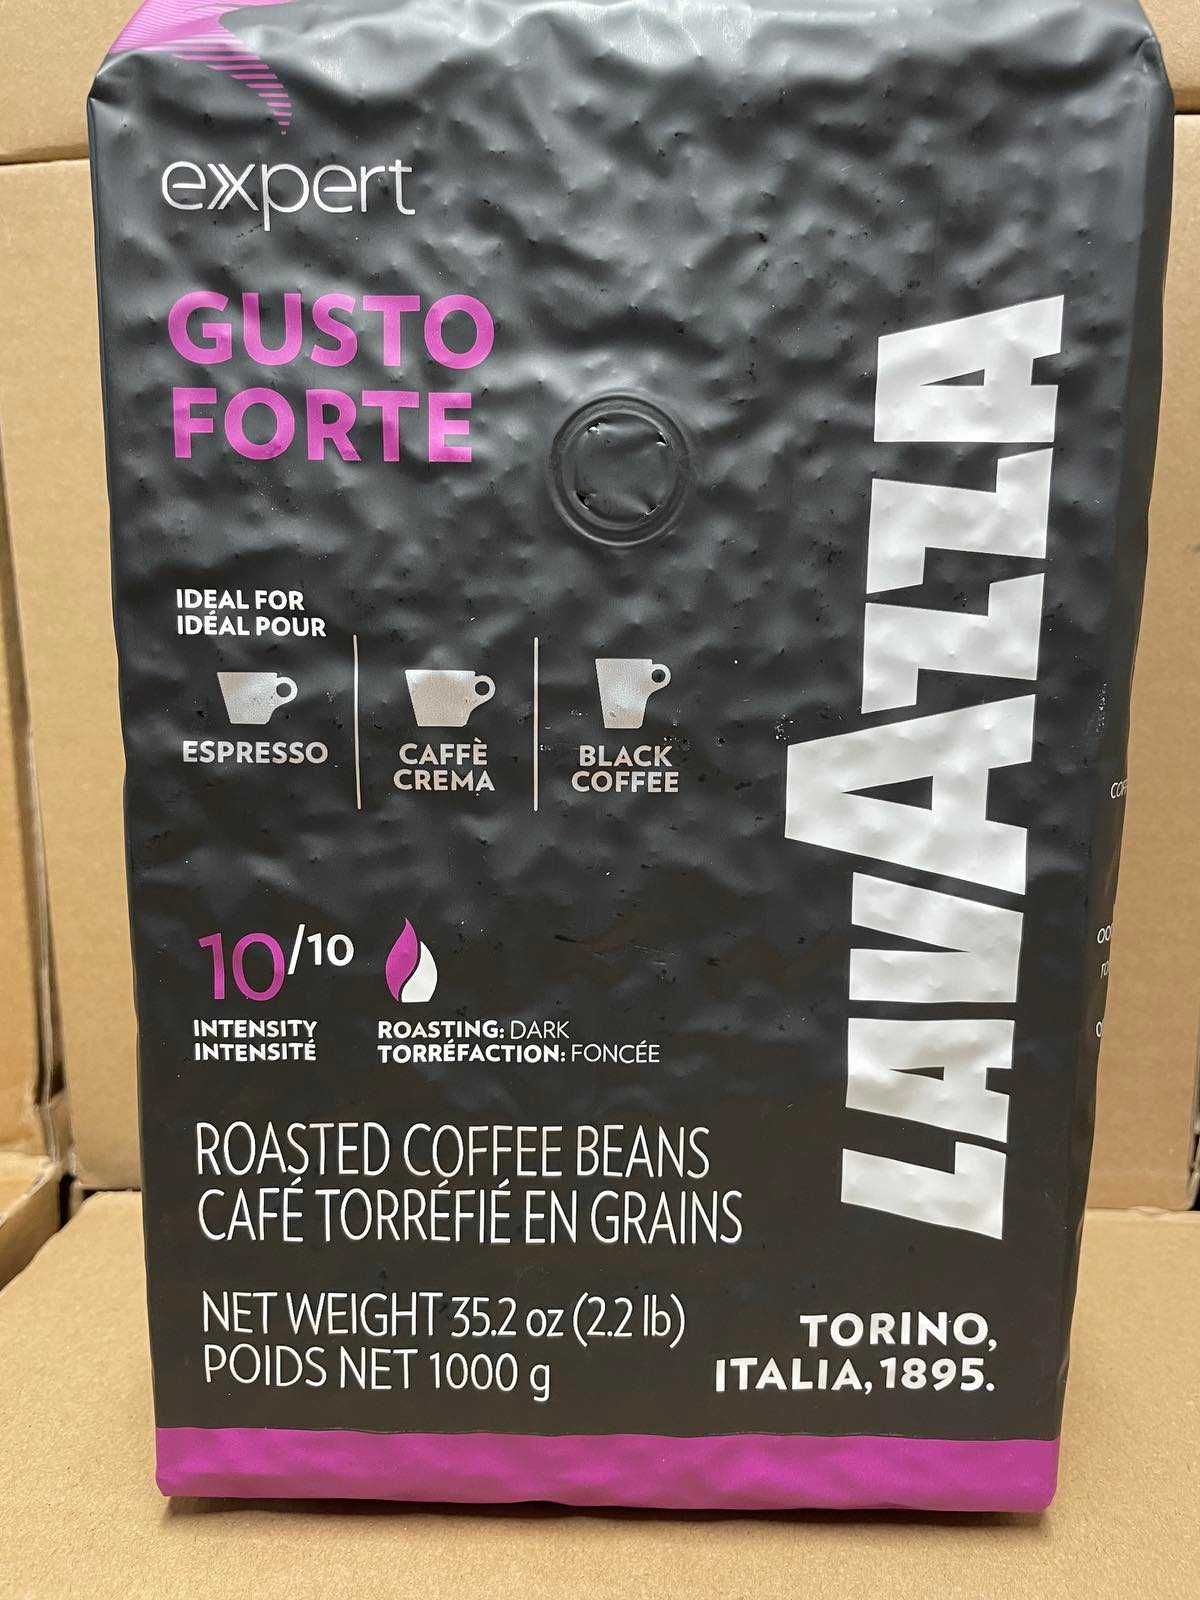 Кафе на зърна LAVAZZA Gran Espresso Crema e Aroma/ЛАВАЦА Гран еспресо